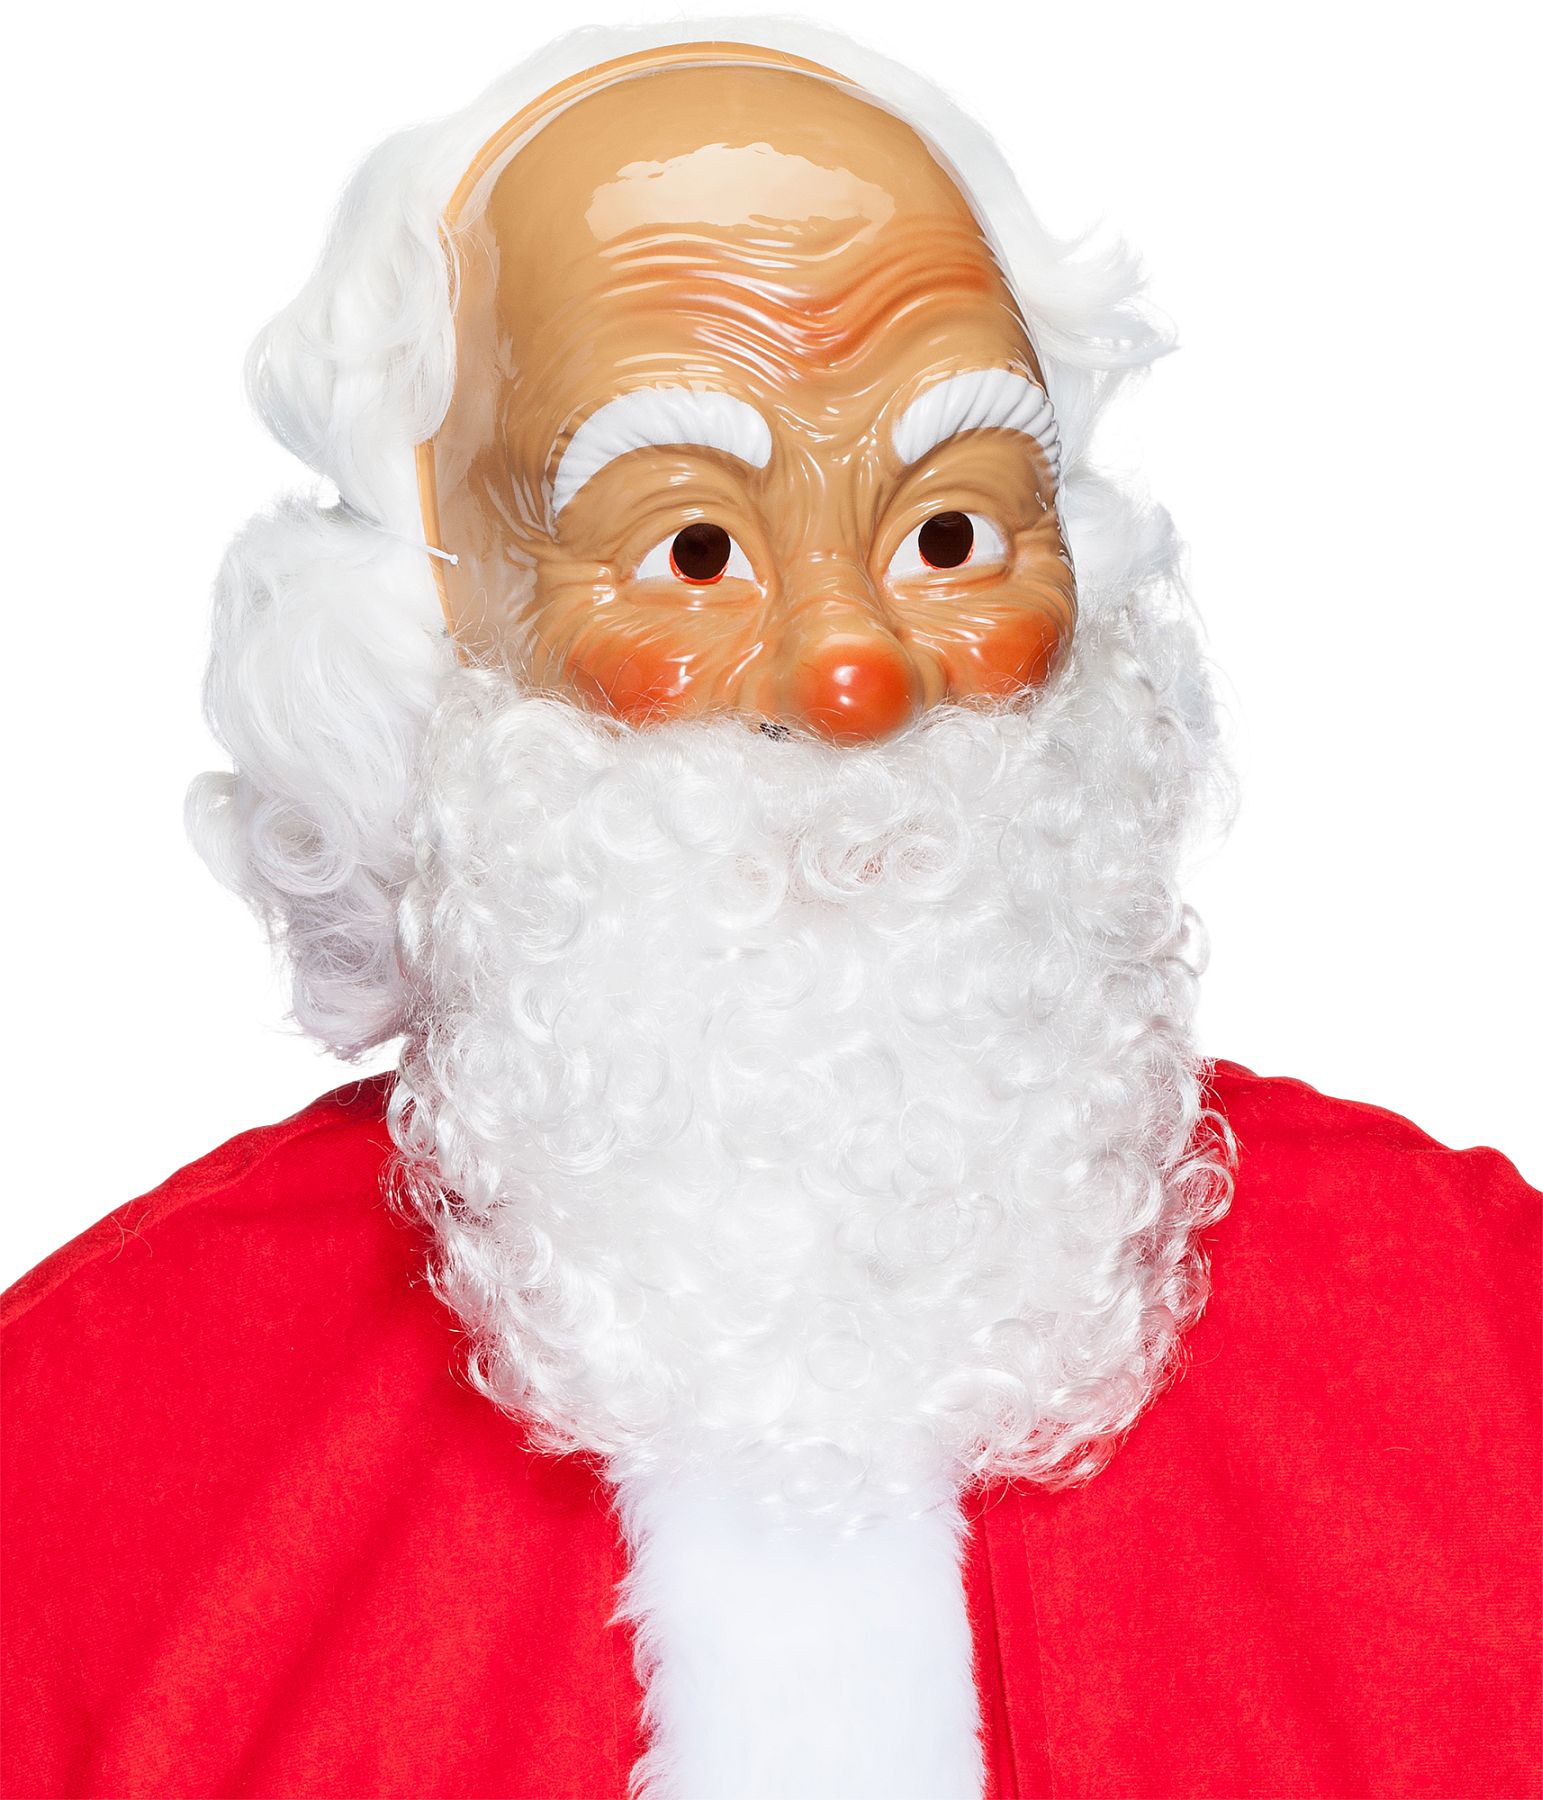 Santa Claus mask with beard